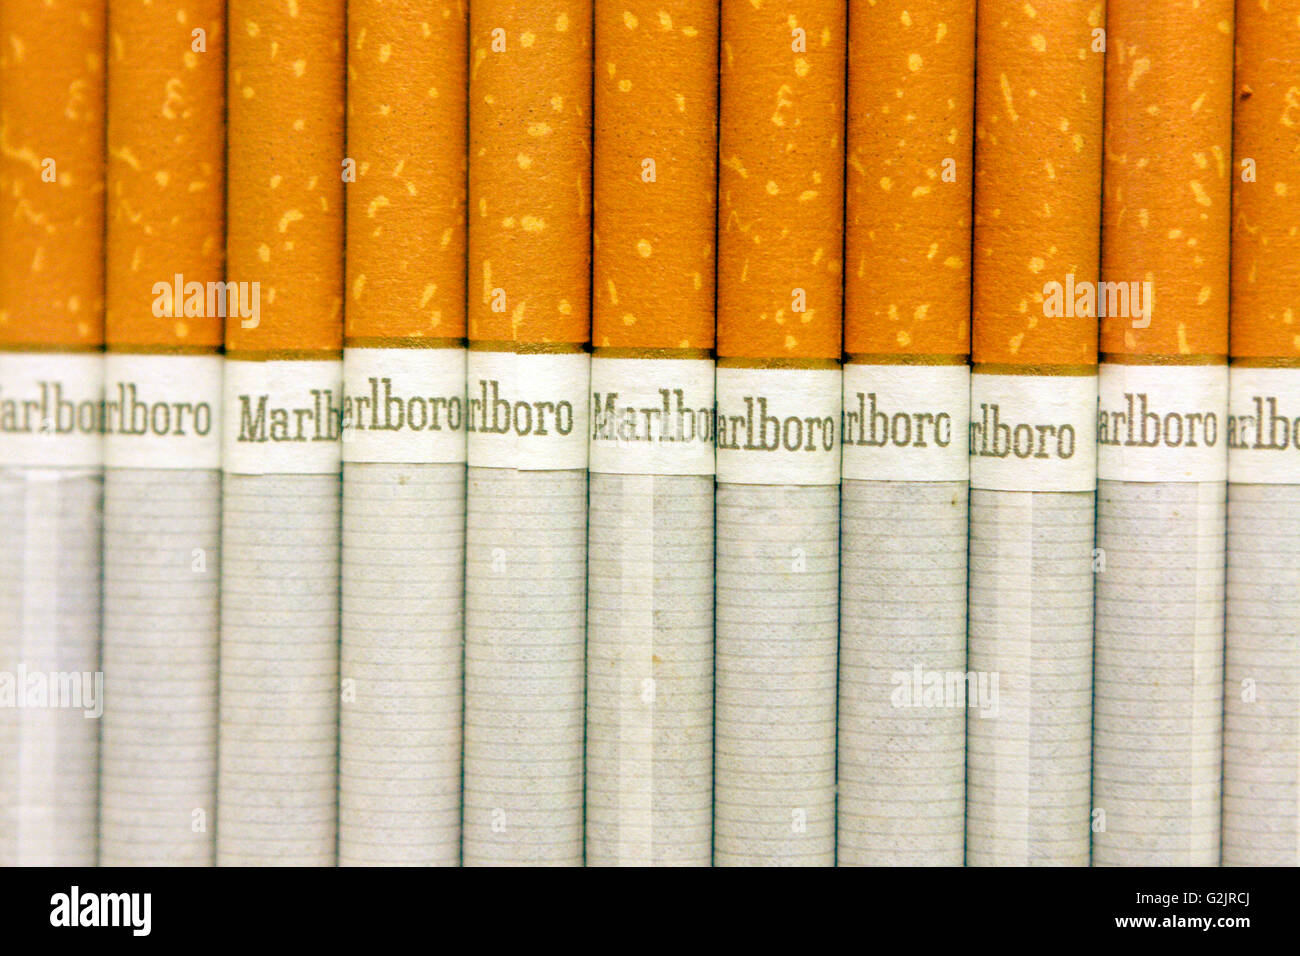 cigarette, brand Marlboro Stock Photo